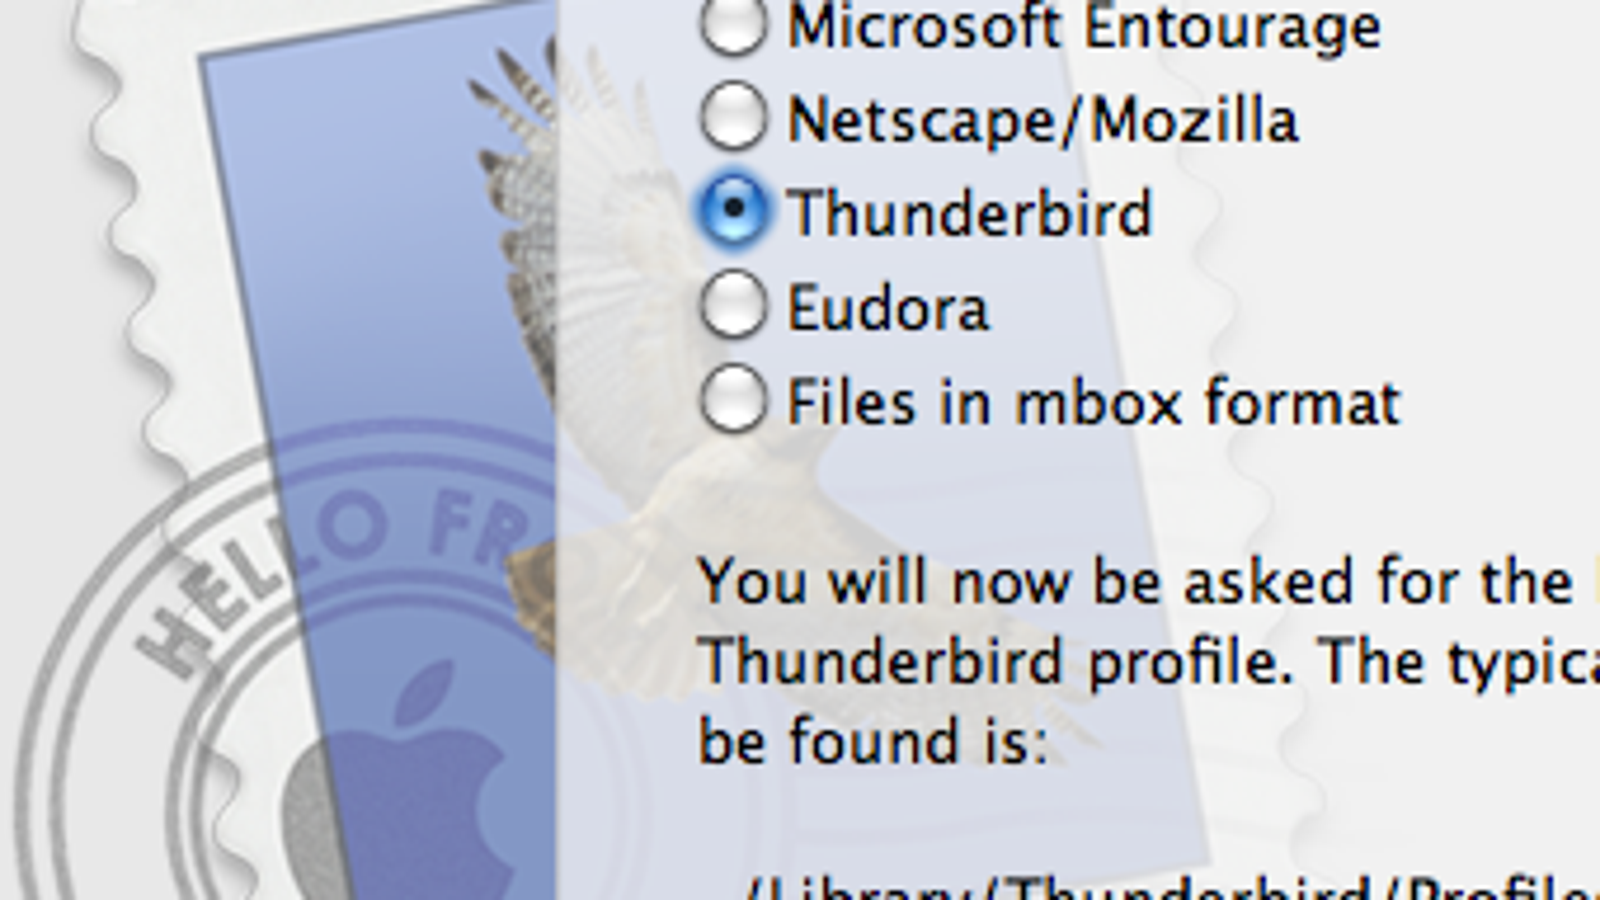 apple mail vs thunderbird